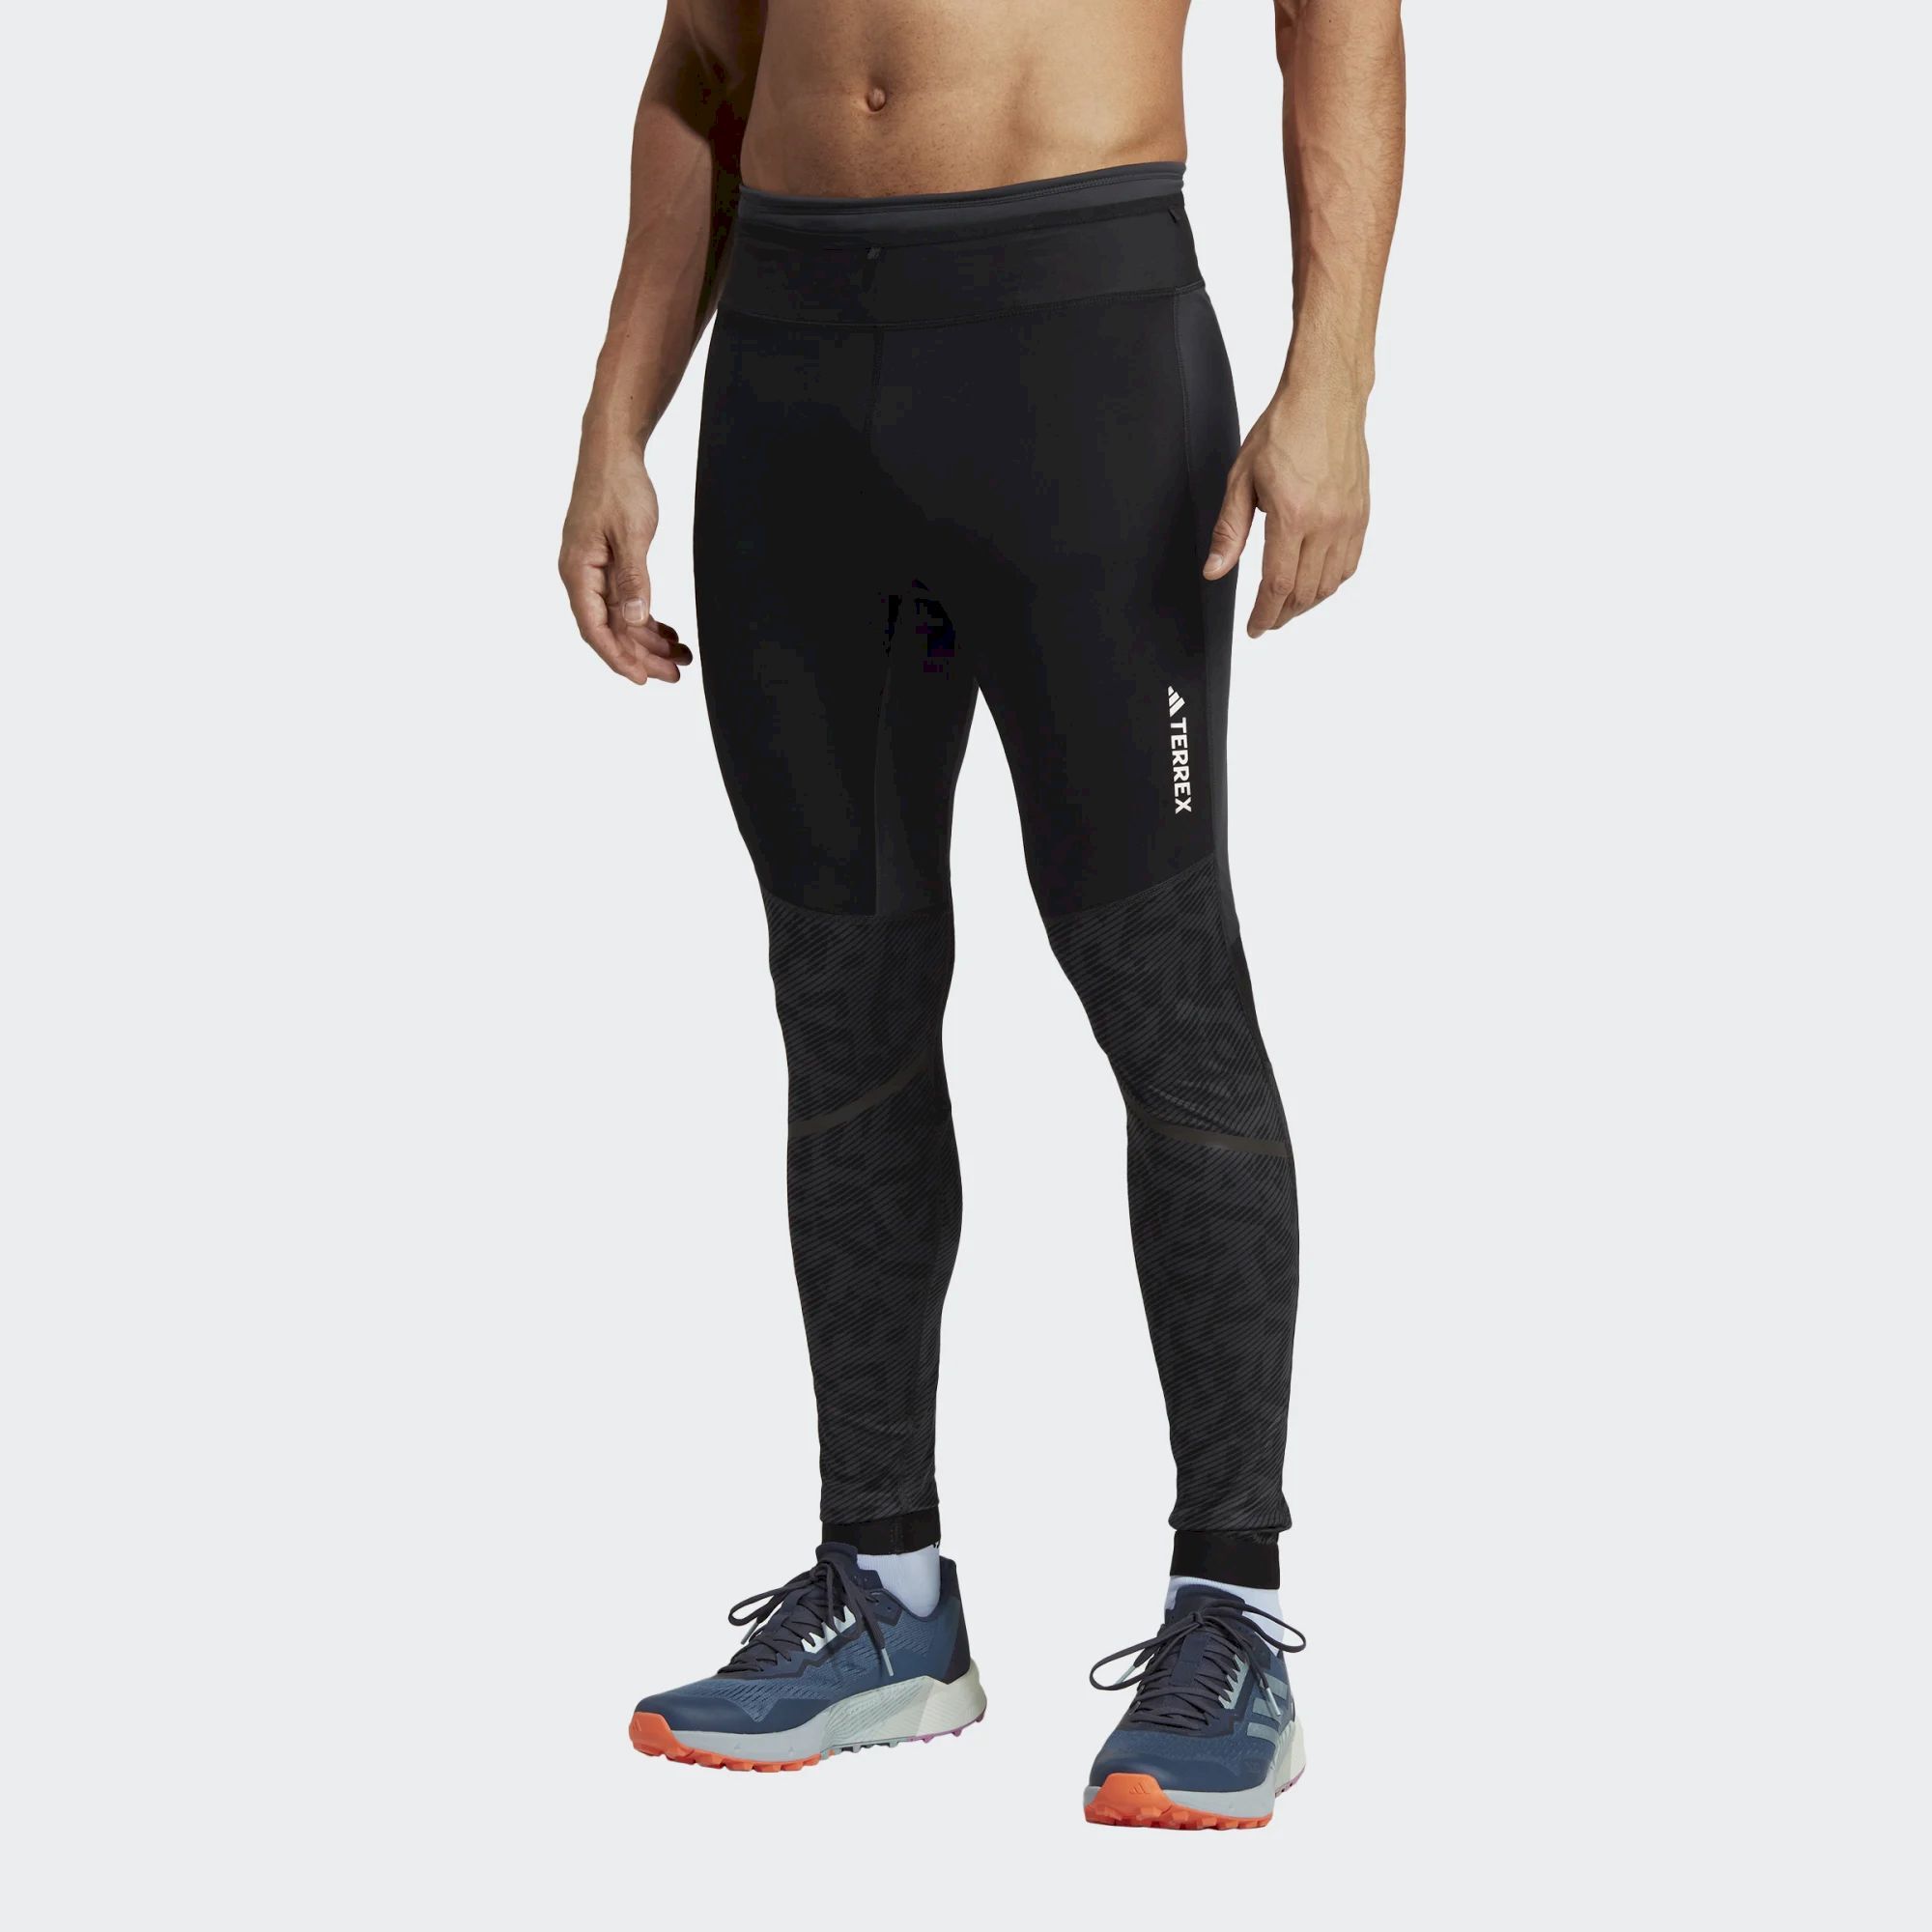 Adidas Agravic tight - Running leggings - Men's | Hardloop